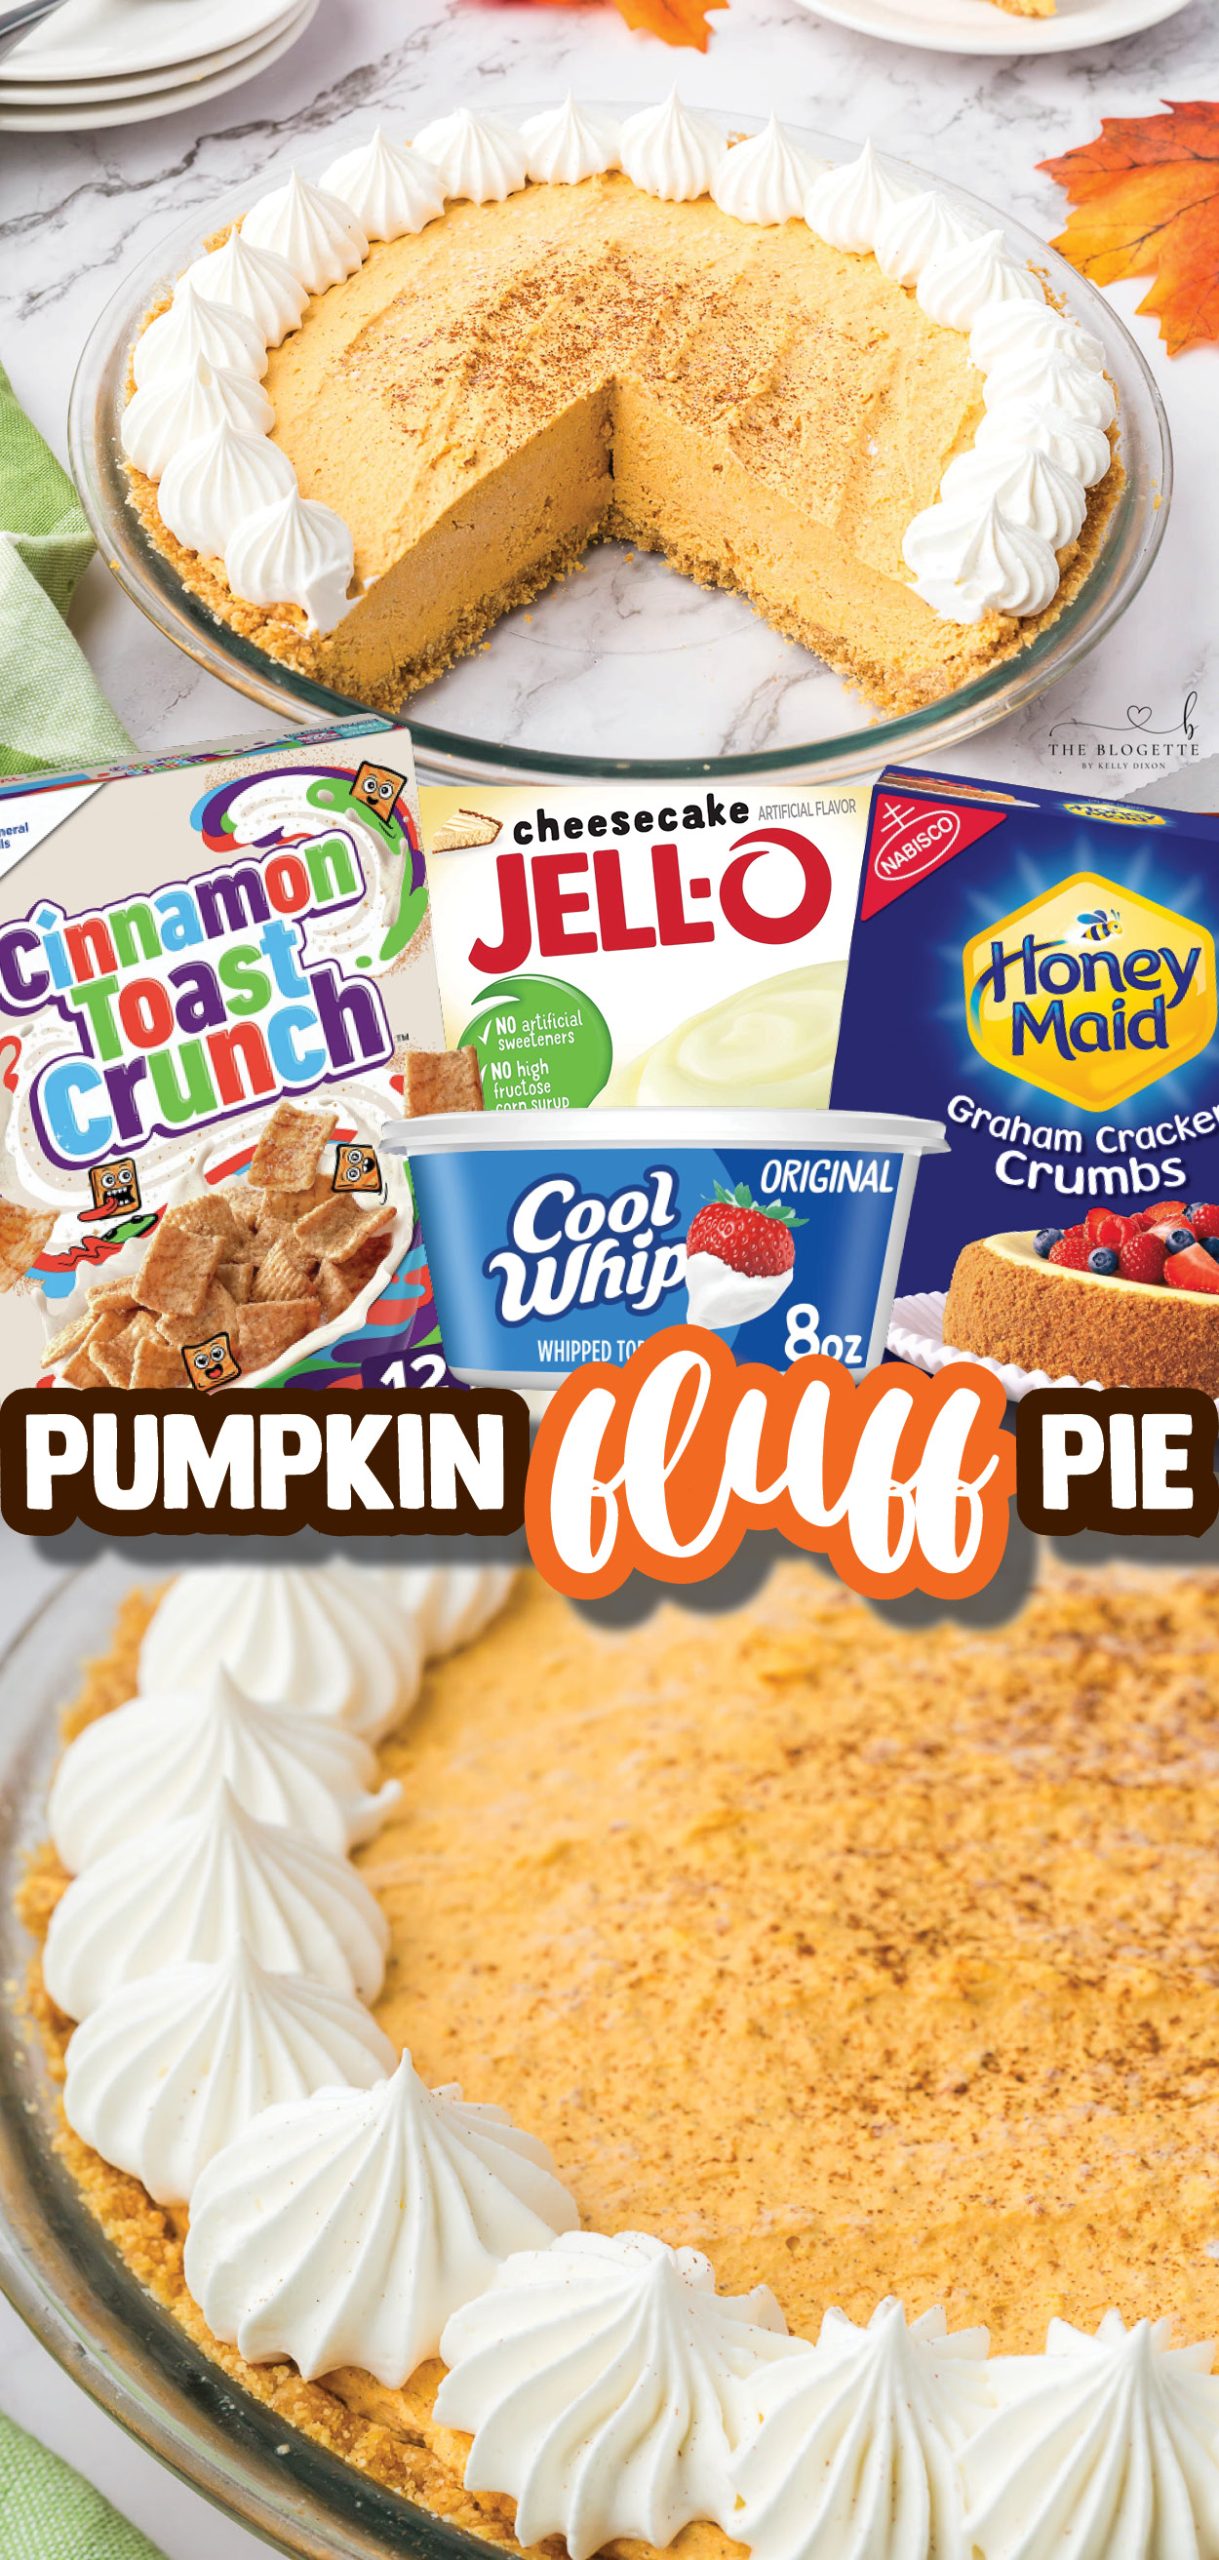 No-bake Pumpkin Fluff Pie is a pumpkin cream pie with a graham cracker crust and a Cinnamon Toast Crush twist!